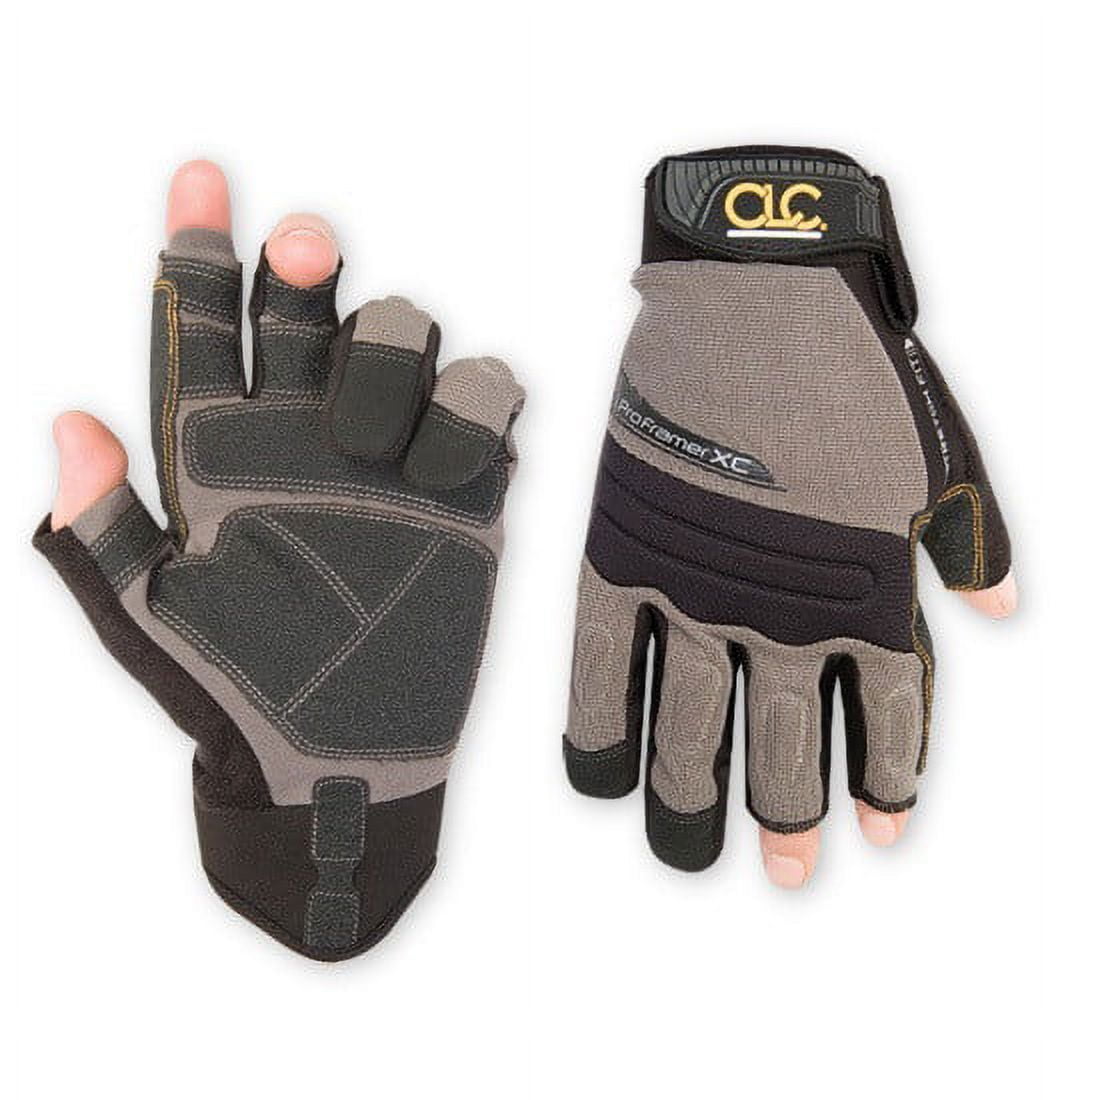 Gorilla Grip RhinoFlex A5 Cut Protection Hi Vis Work Gloves, 25261